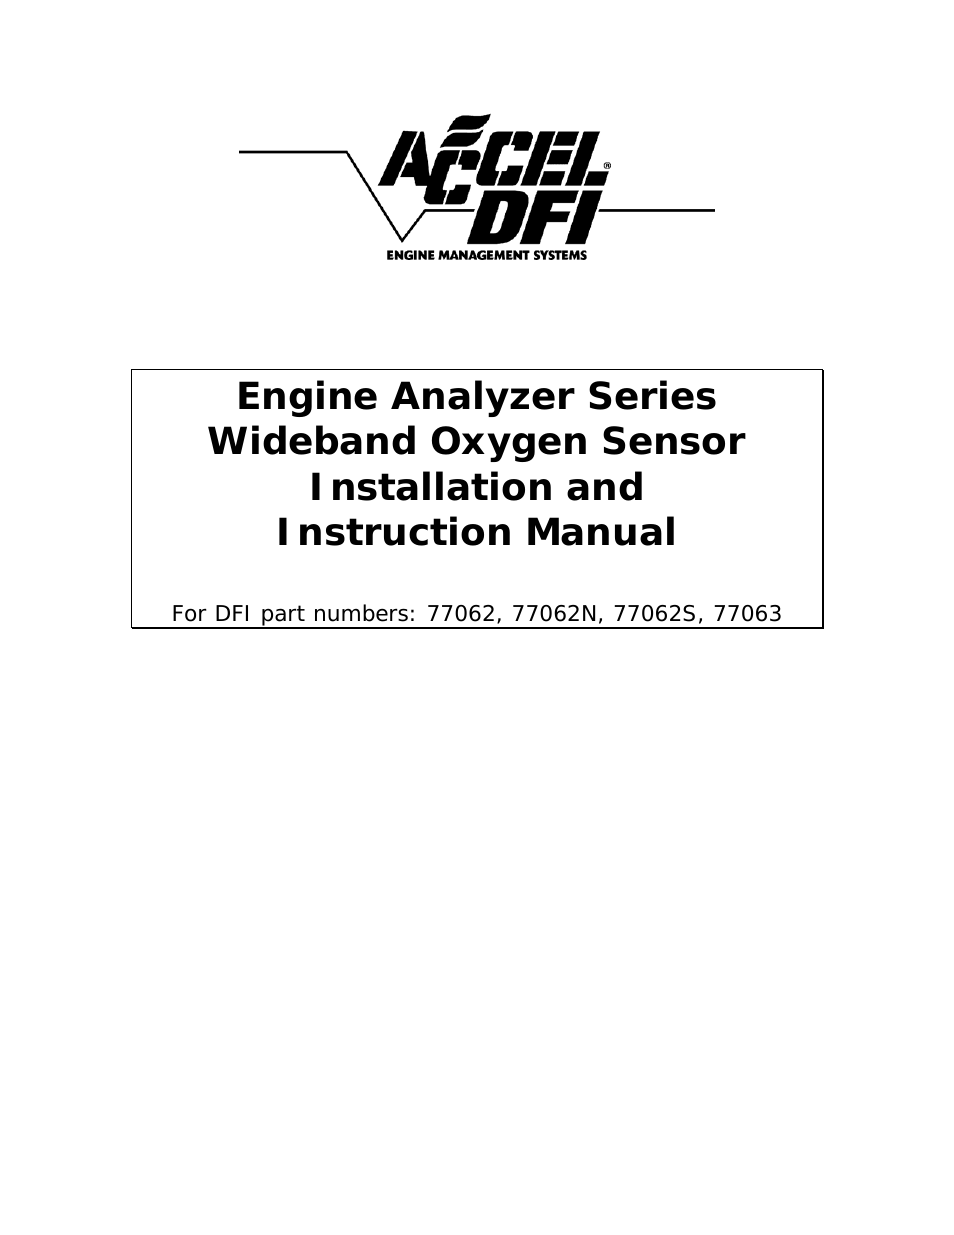 ACCEL Engine Analyzer Series Wideband Oxygen Sensor 77062_77062n_77062s_77063